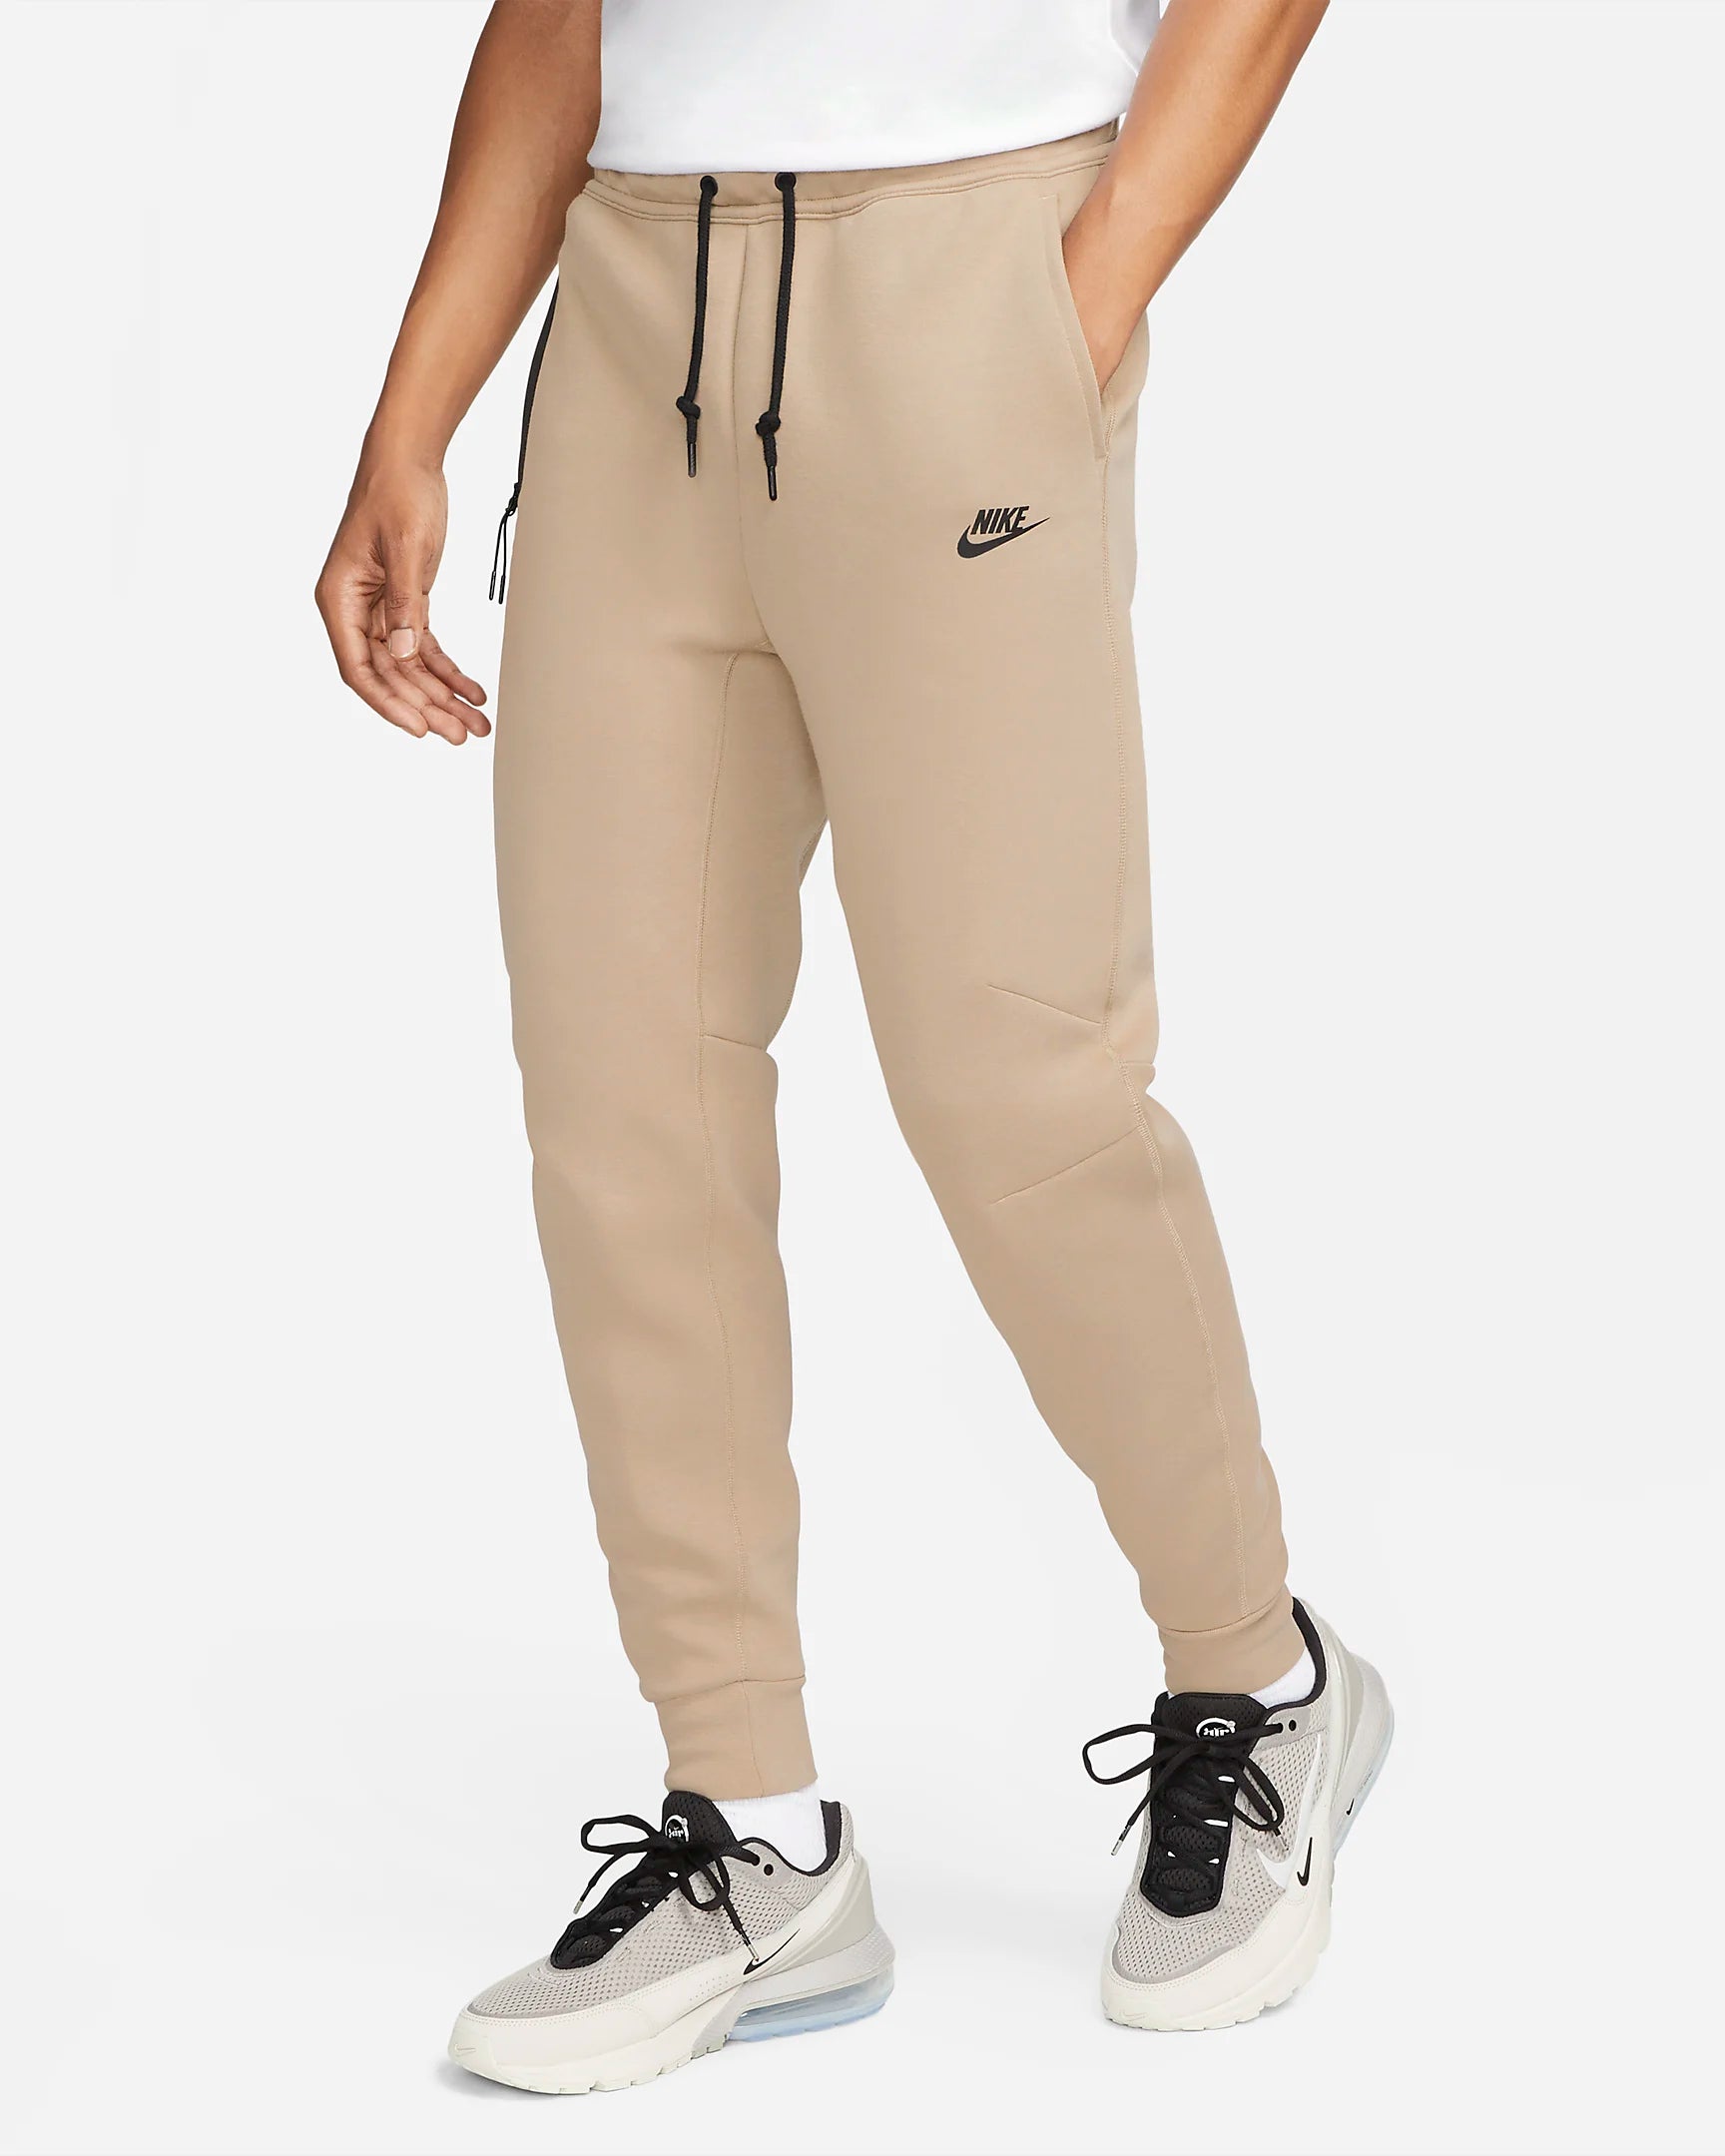 Pantalon Nike Tech Fleece - Marron